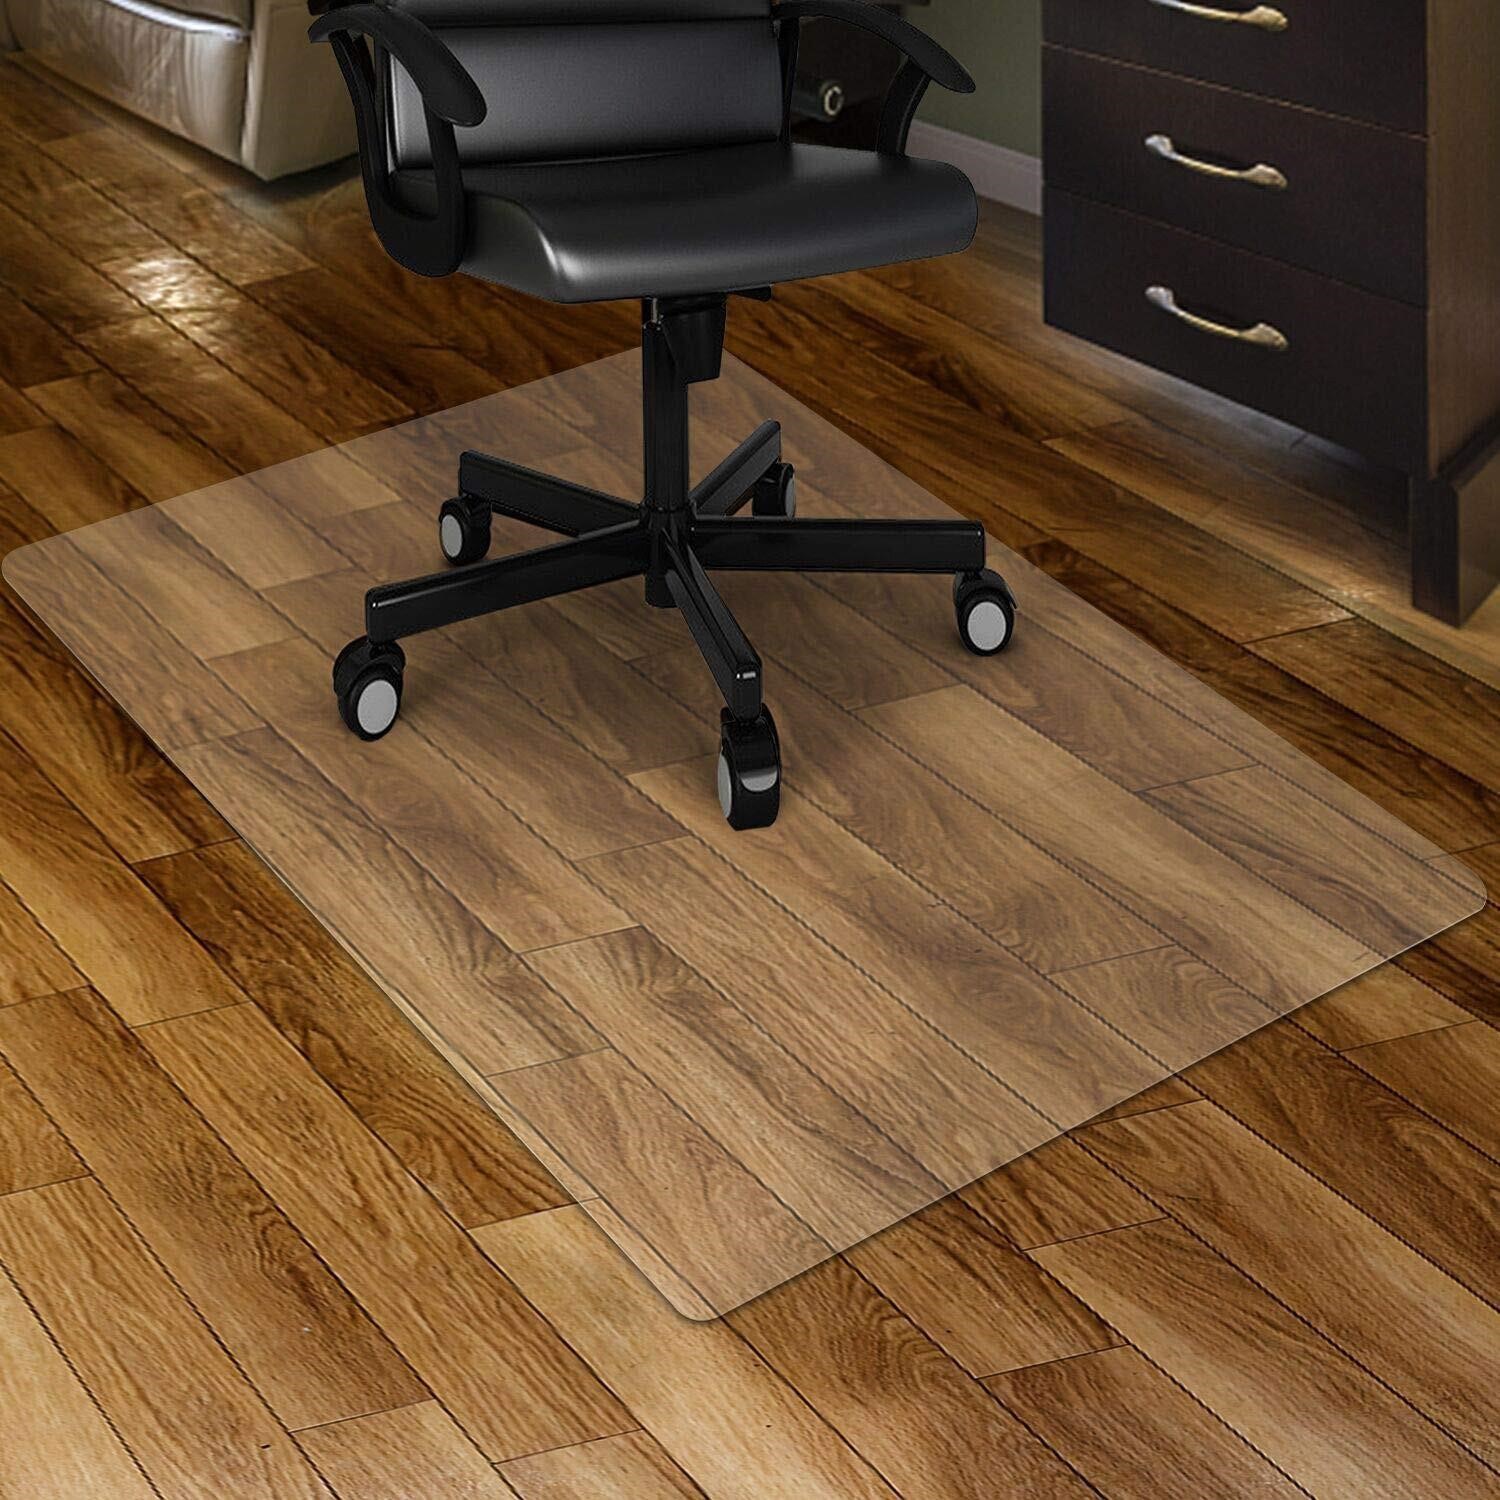 Kuyal Clear Chair mat for Hardwood Floor 30 x 48 i